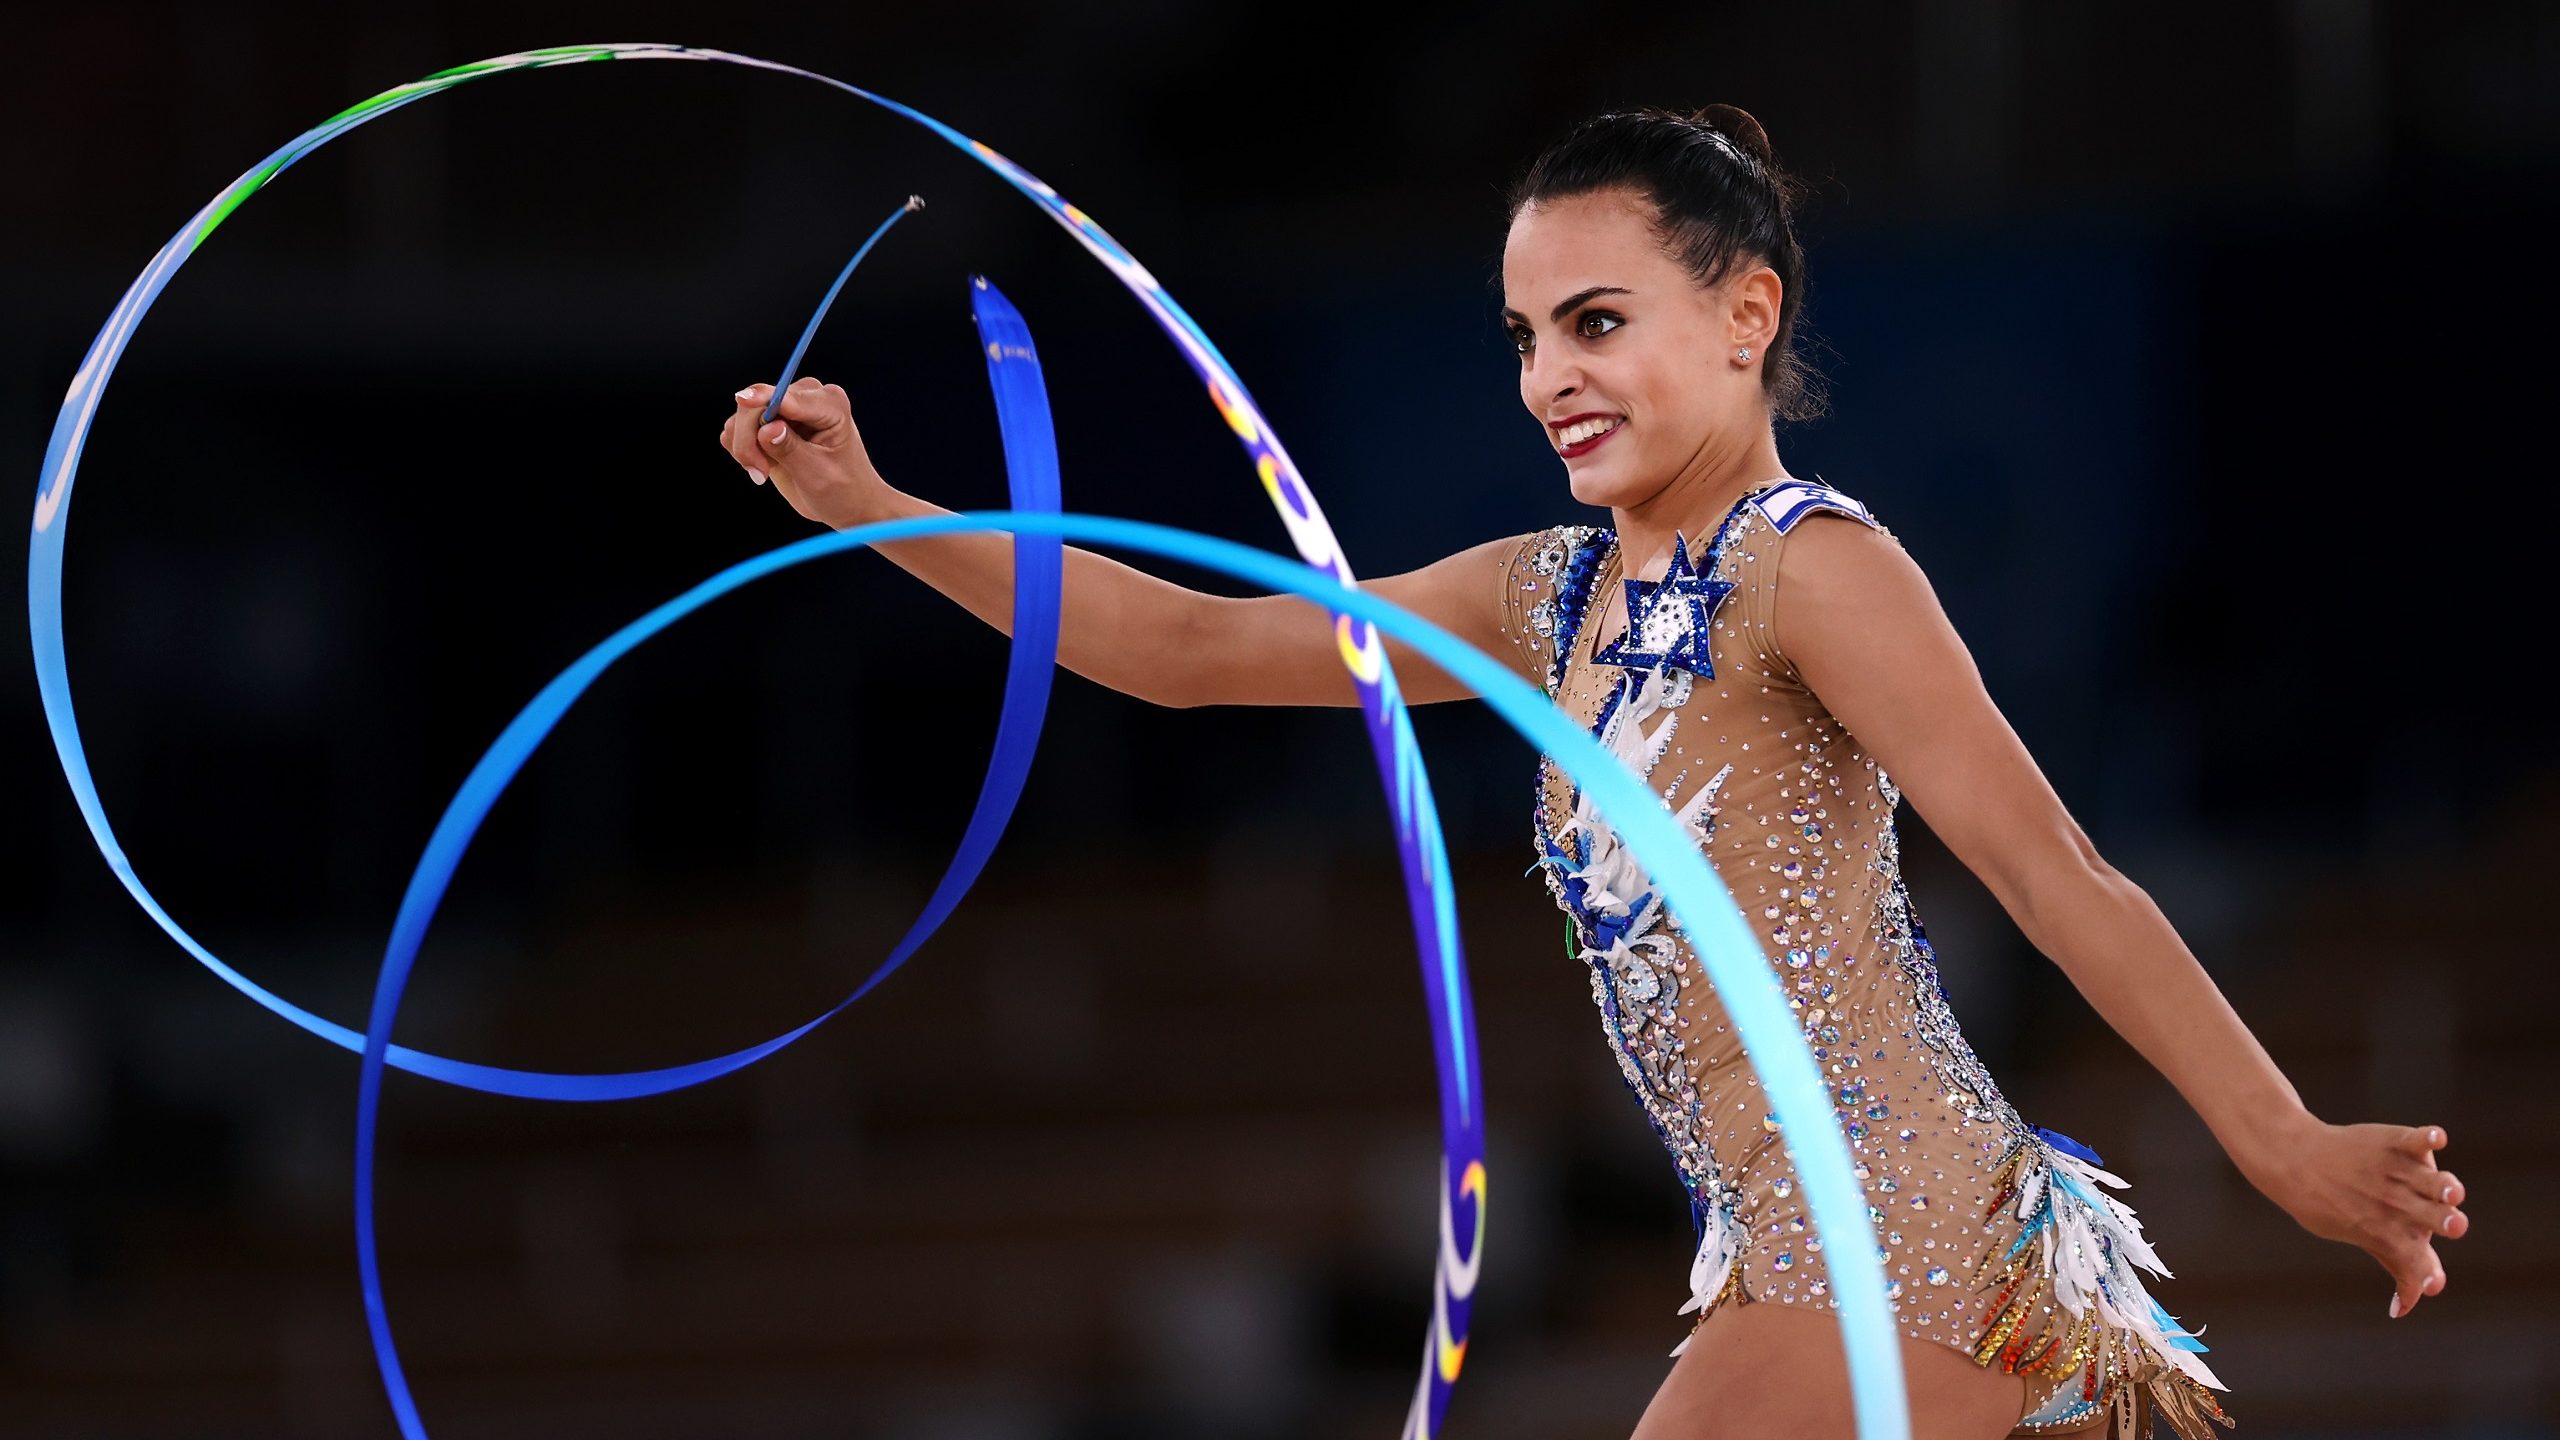 Olympics End: Israeli Rhythmic Gymnast Linoy Ashram Takes All-Around Gold